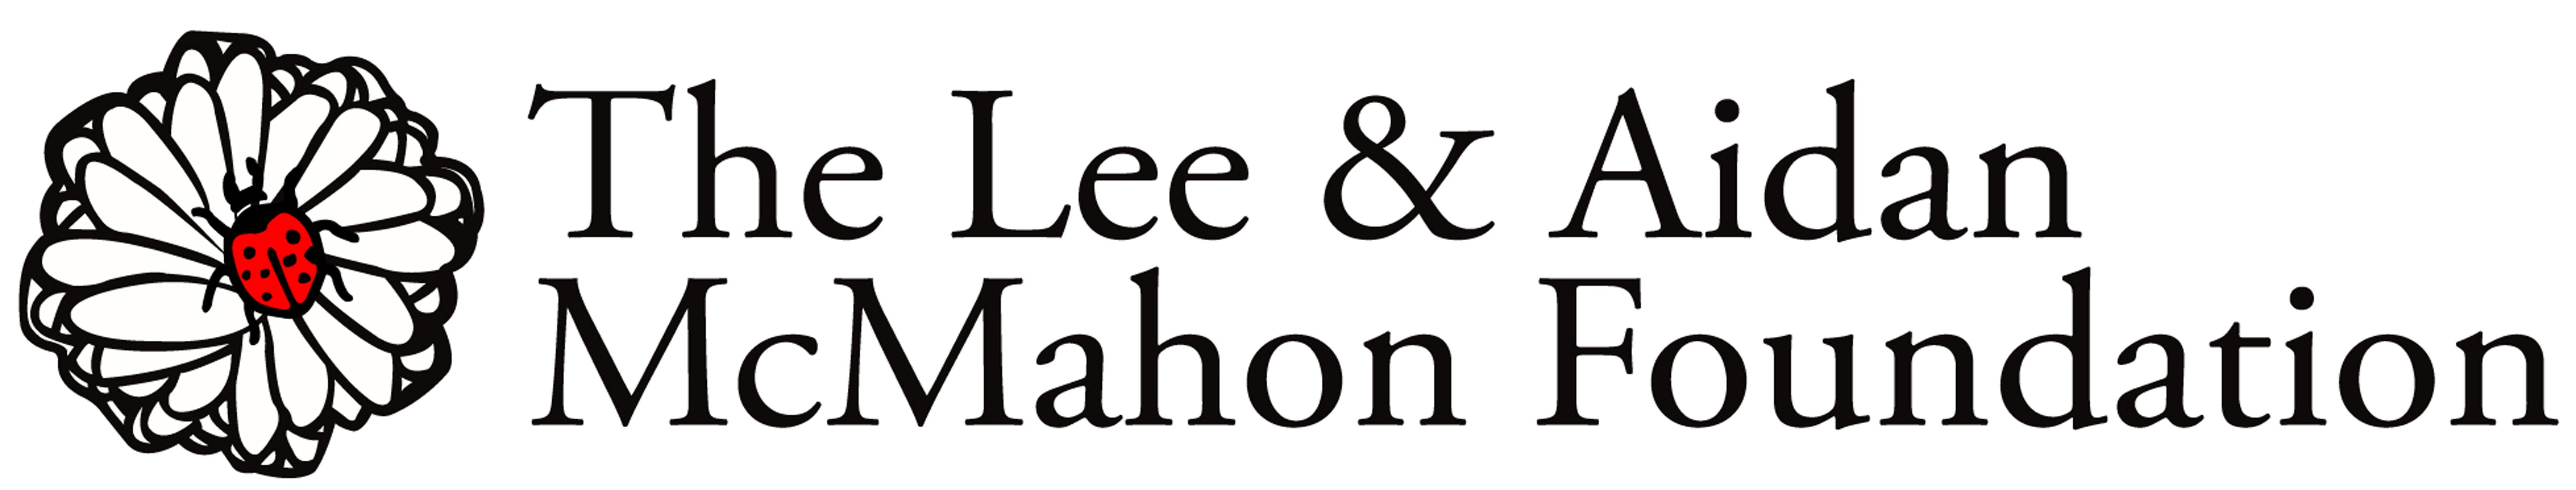 Black Aidan Logo - LOGO-LEE-AIDAN-FOUNDATION_biglogo – Lee & Aidan McMahon Foundation